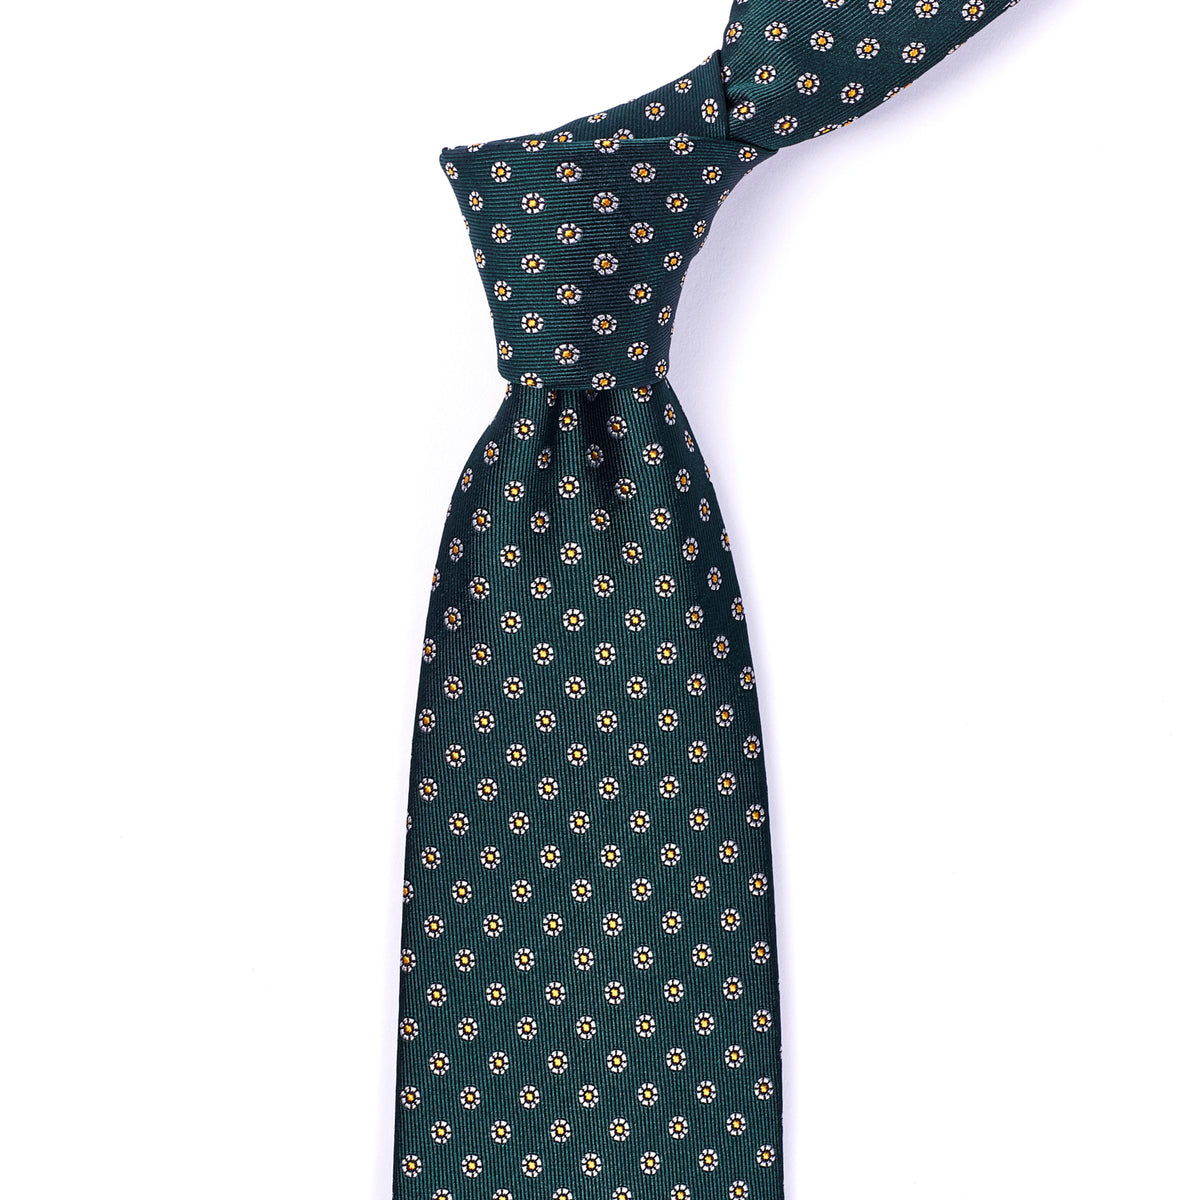 Sovereign Grade Hunter Green Floral Jacquard Tie, 150 cm